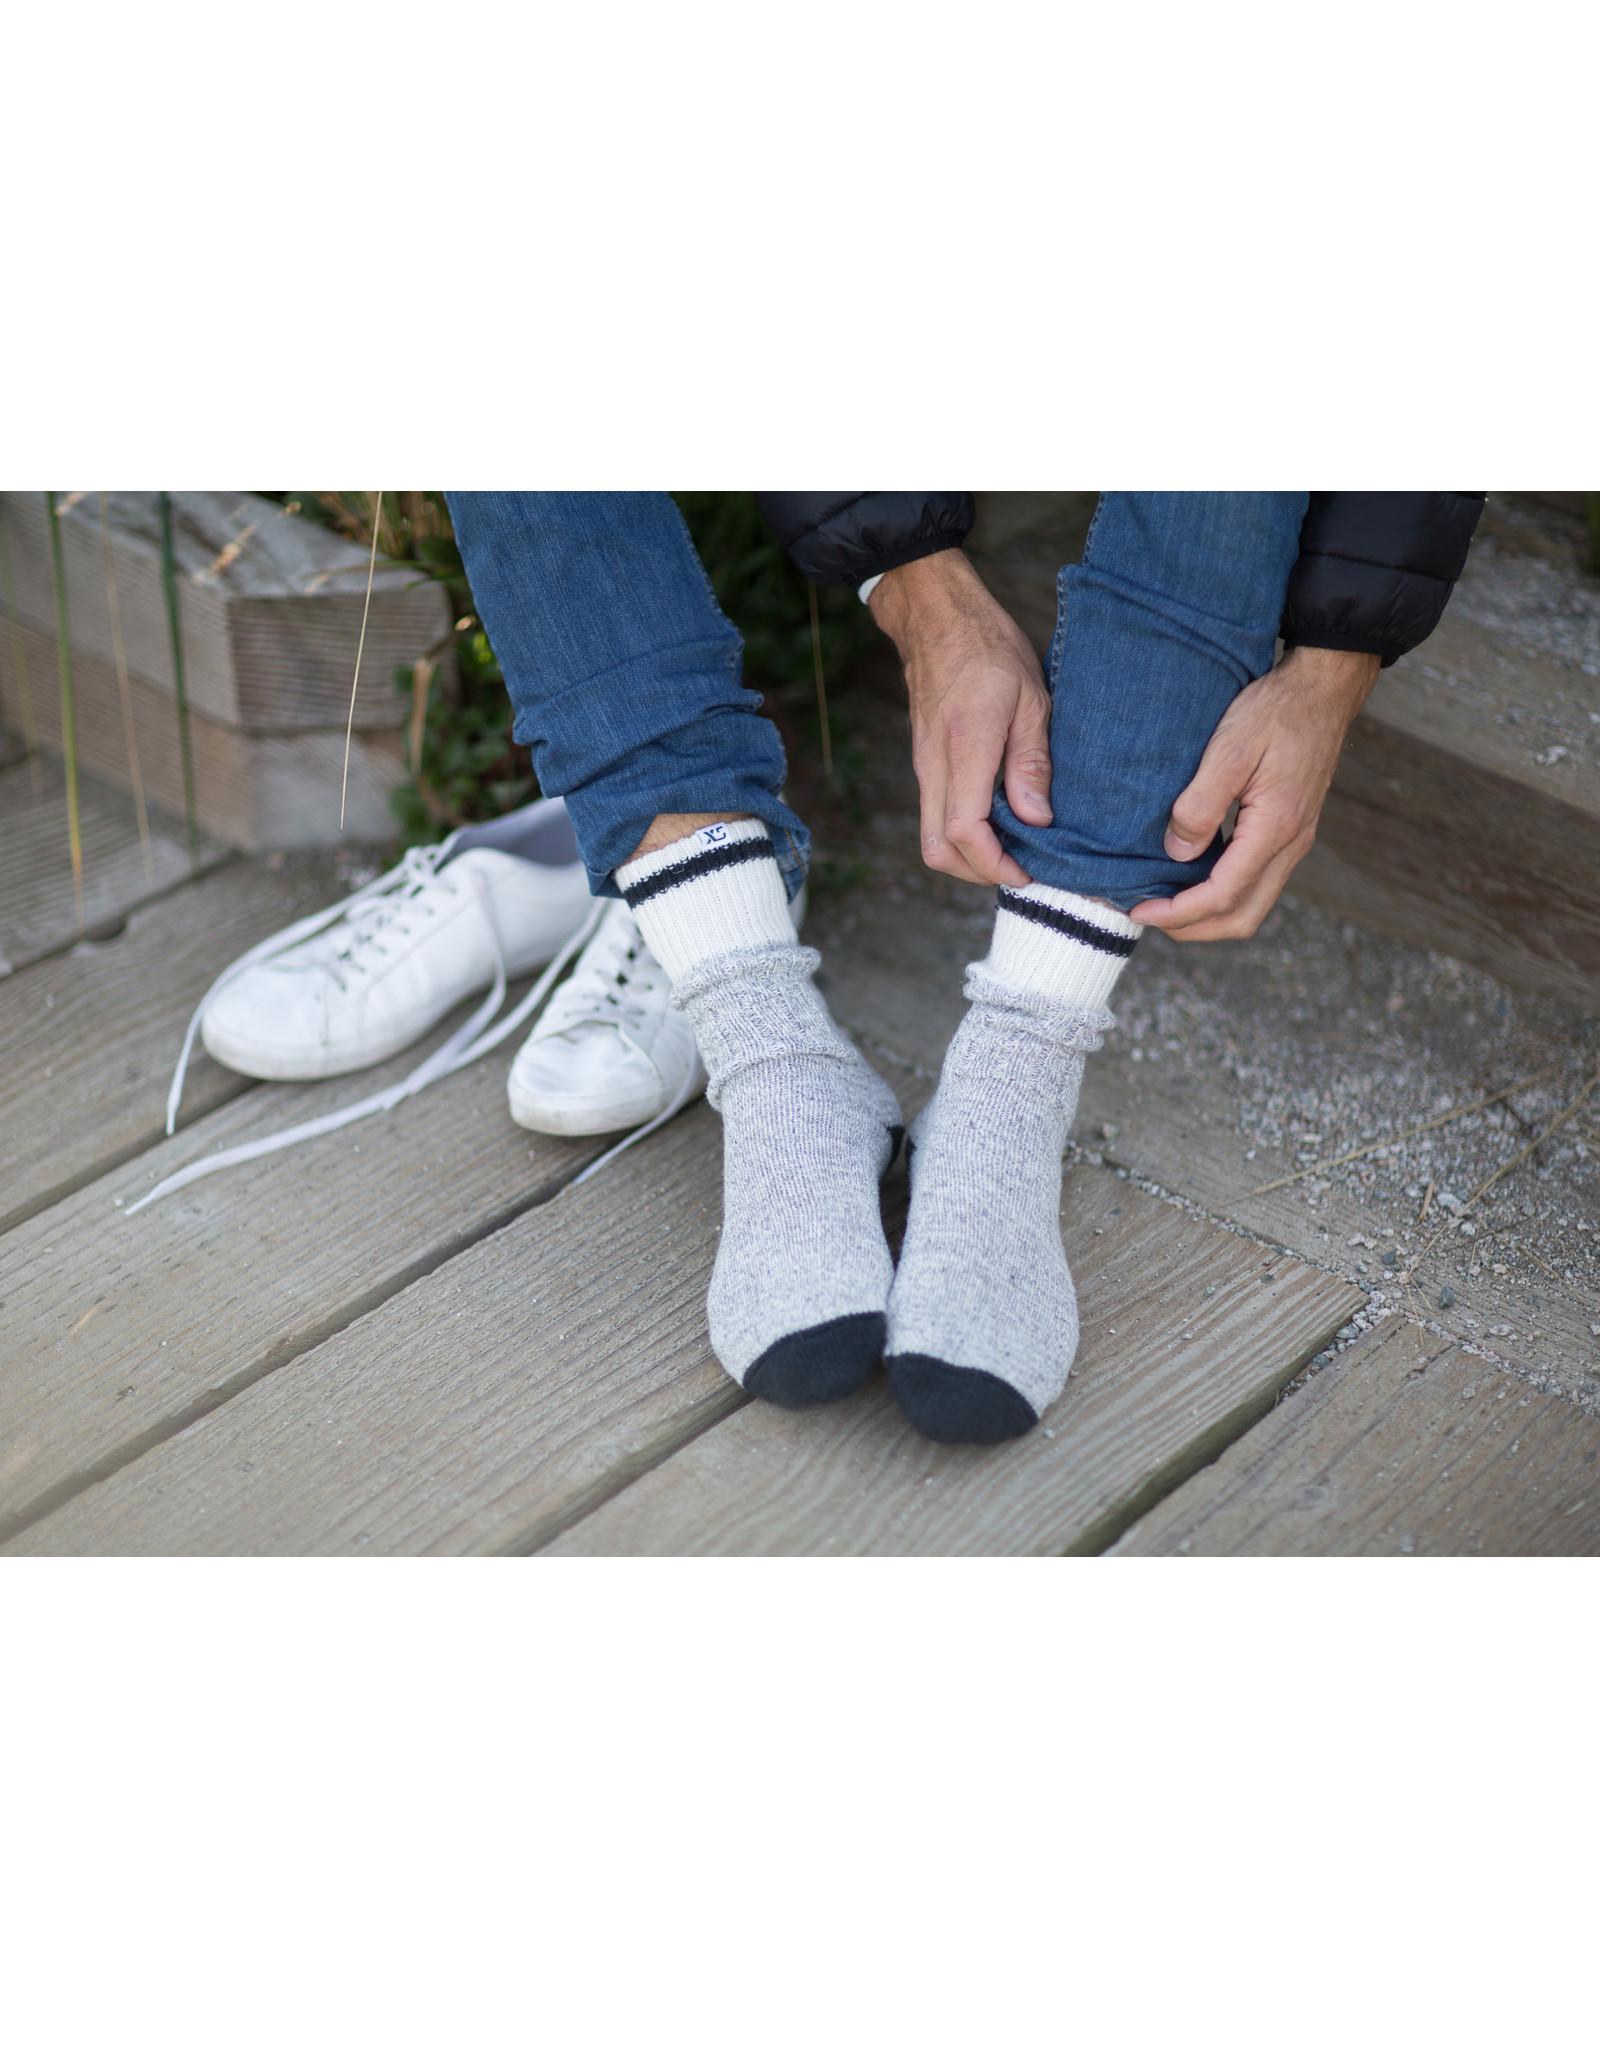 BGS XS Unified - Wool Camp Socks / Black LRG